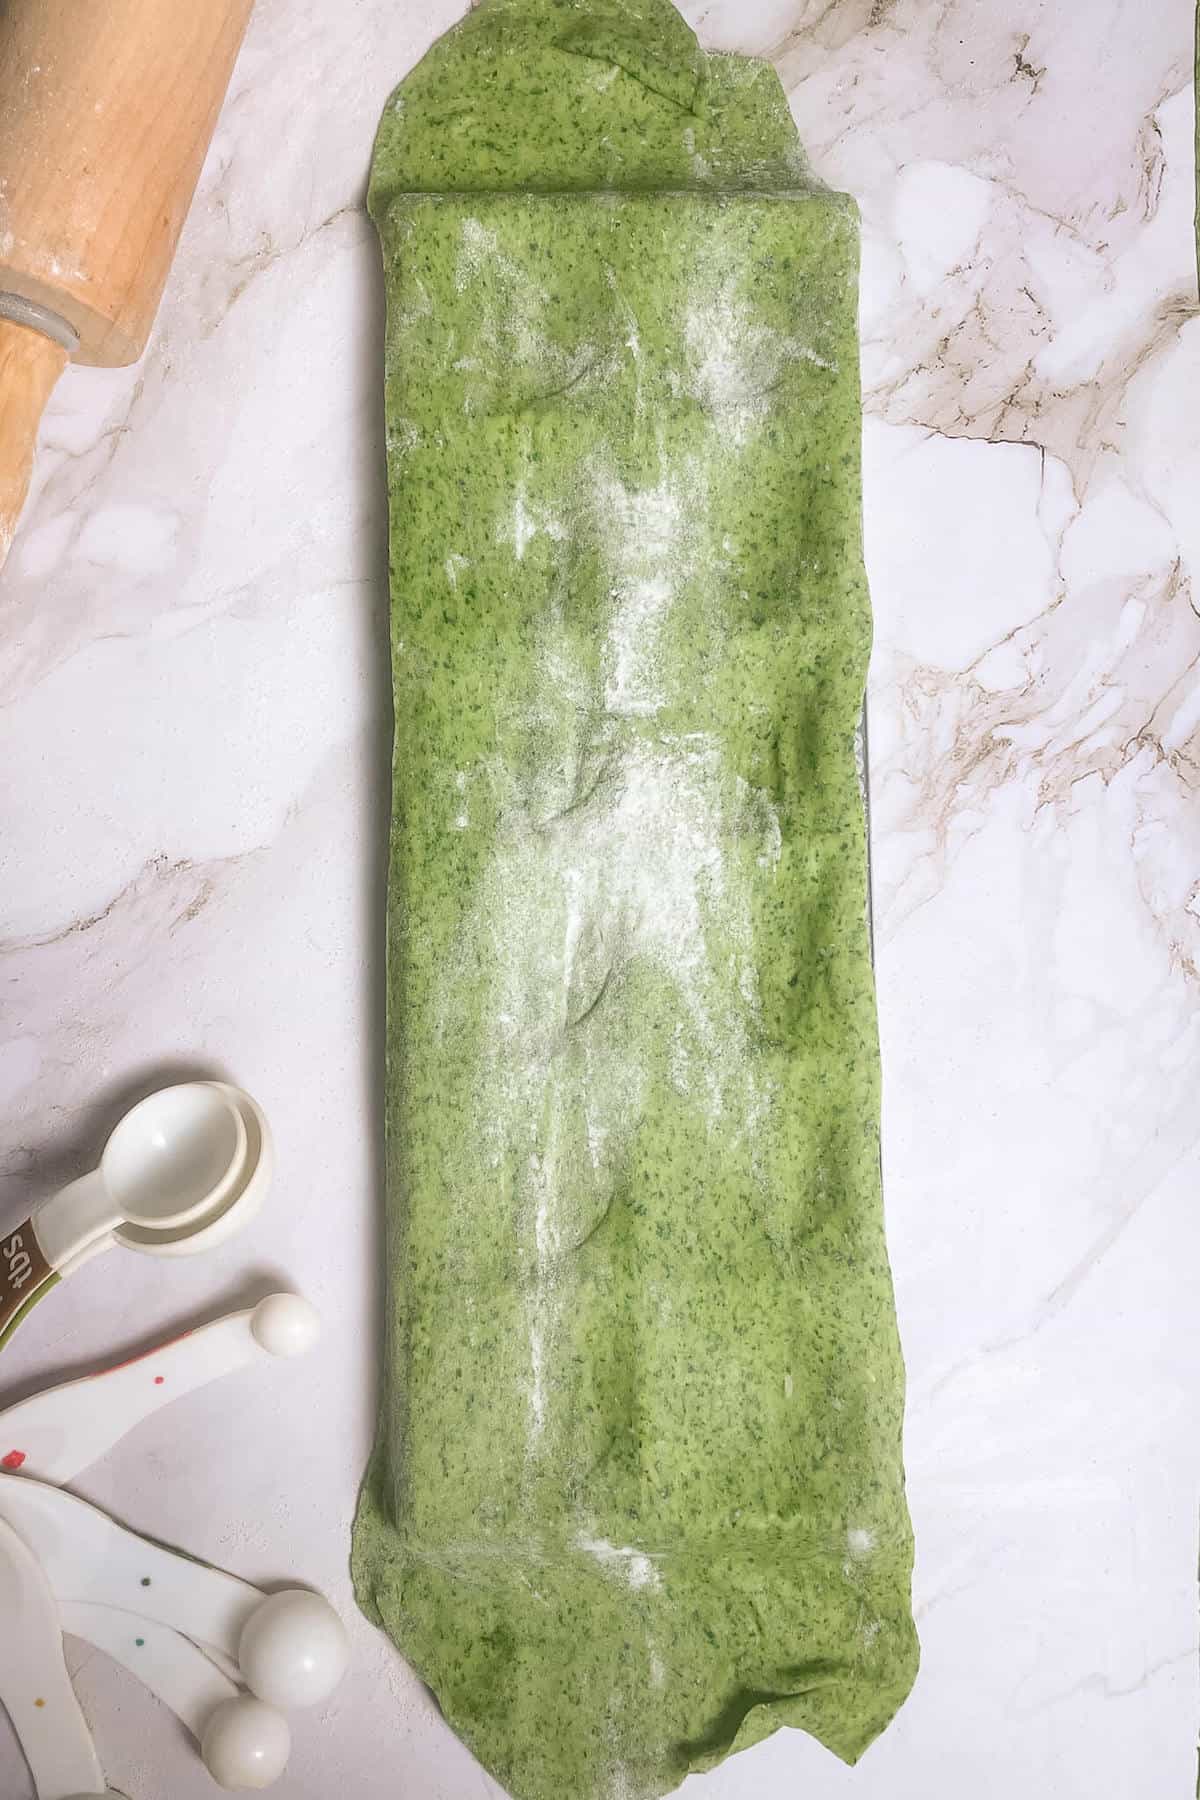 green ravioli making process  